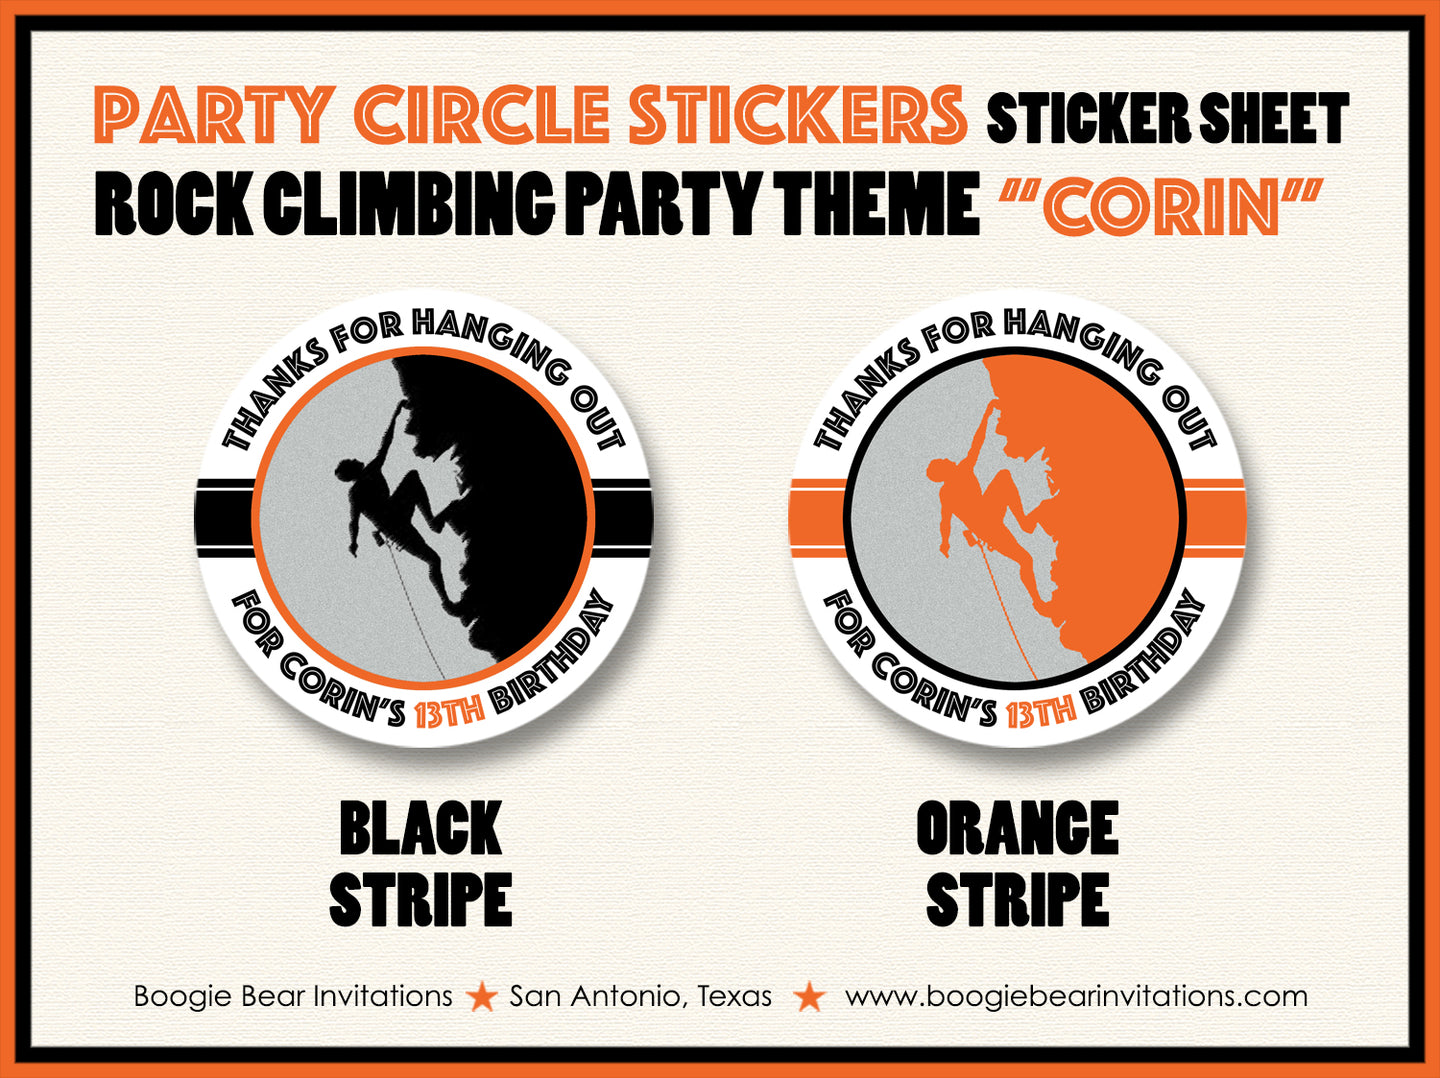 Rock Climbing Birthday Party Stickers Circle Sheet Round Orange Boogie Bear Invitations Corin Theme